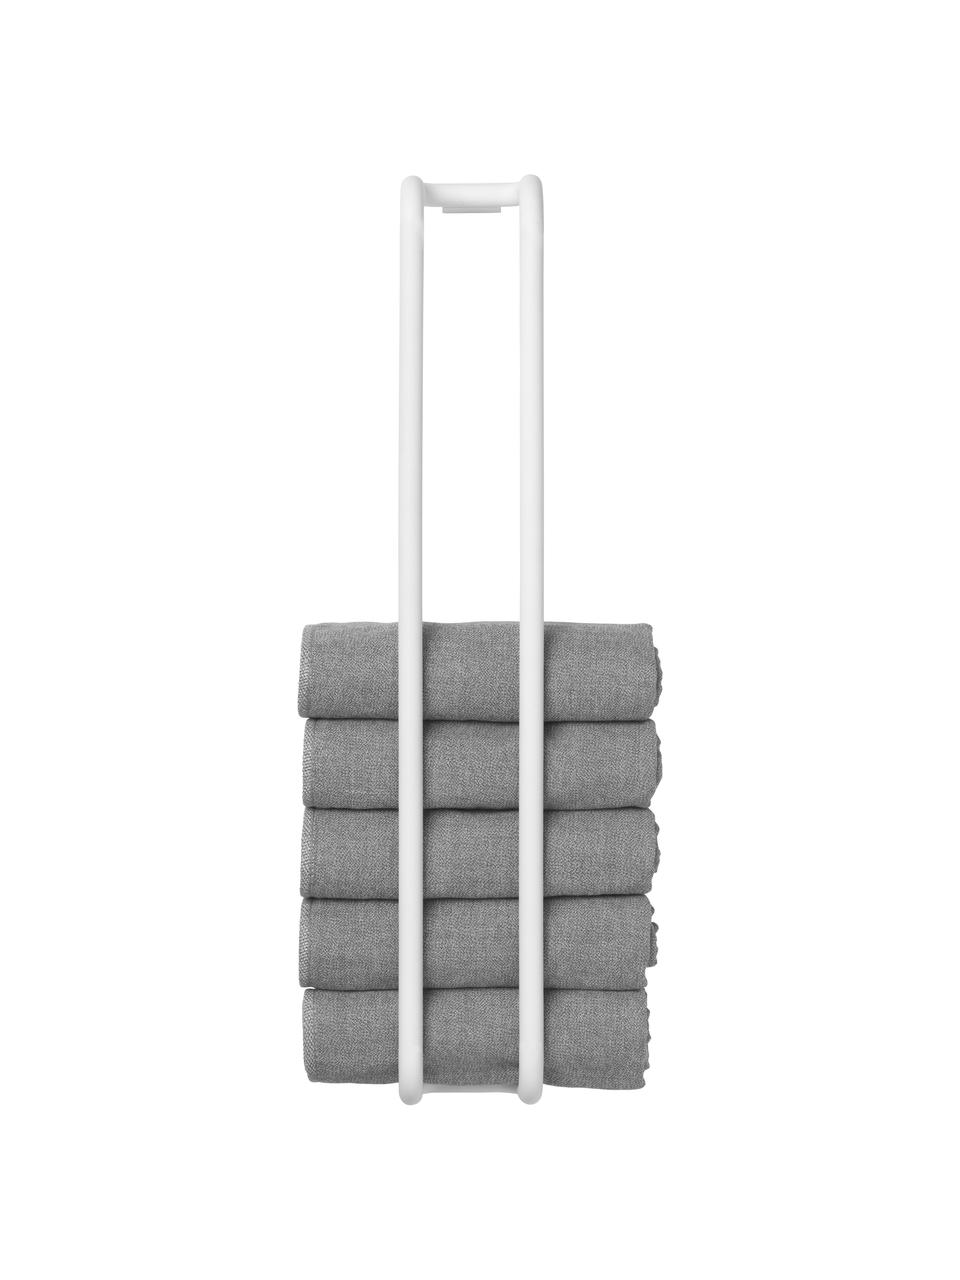 Handtuchhalter Modo aus Metall, Metall, beschichtet, Weiß, B 7 x H 42 cm